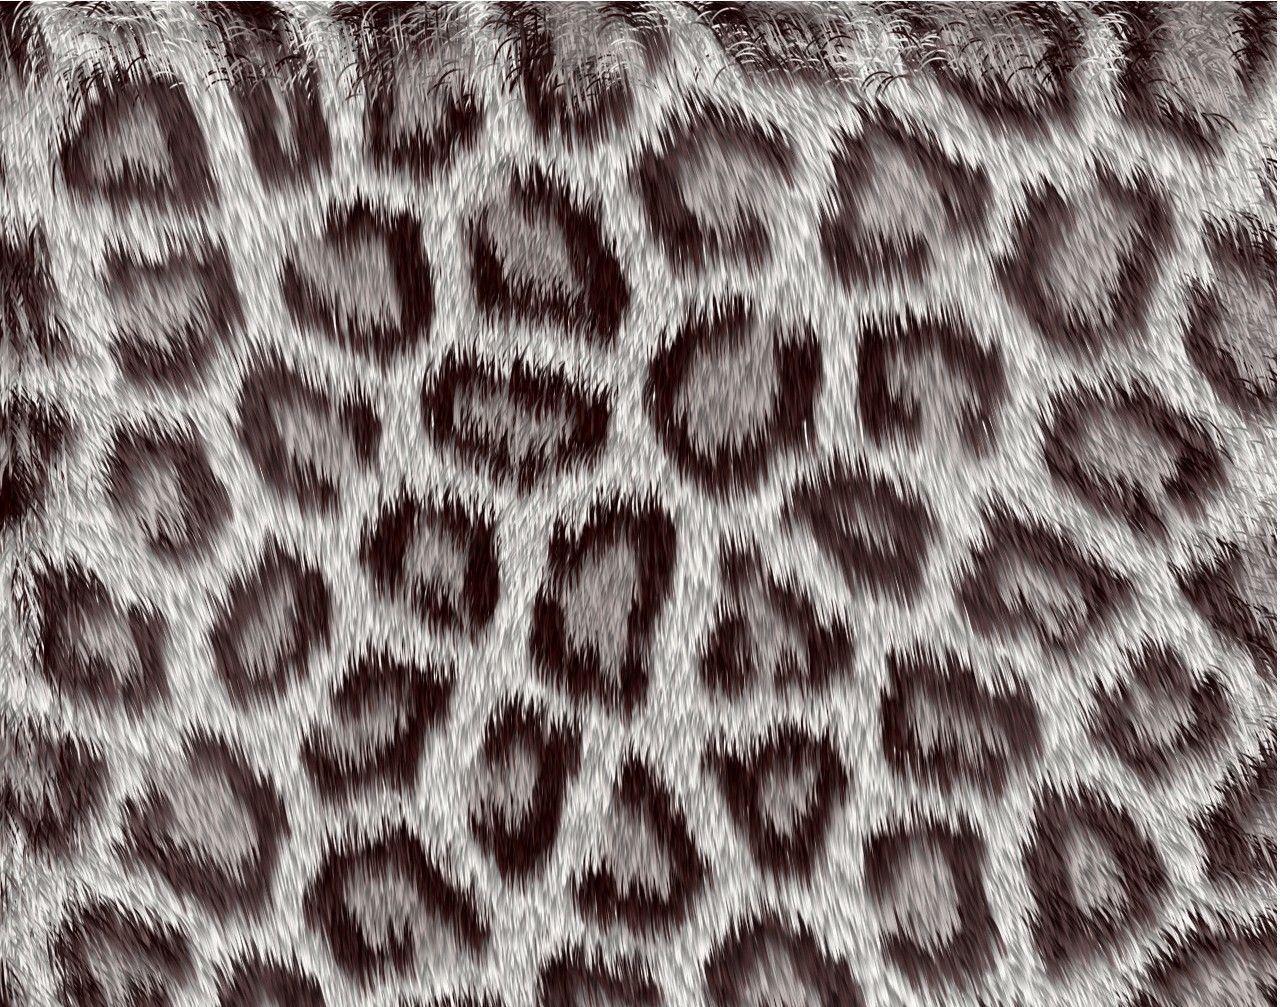 Animals For > Cheetah Background Twitter